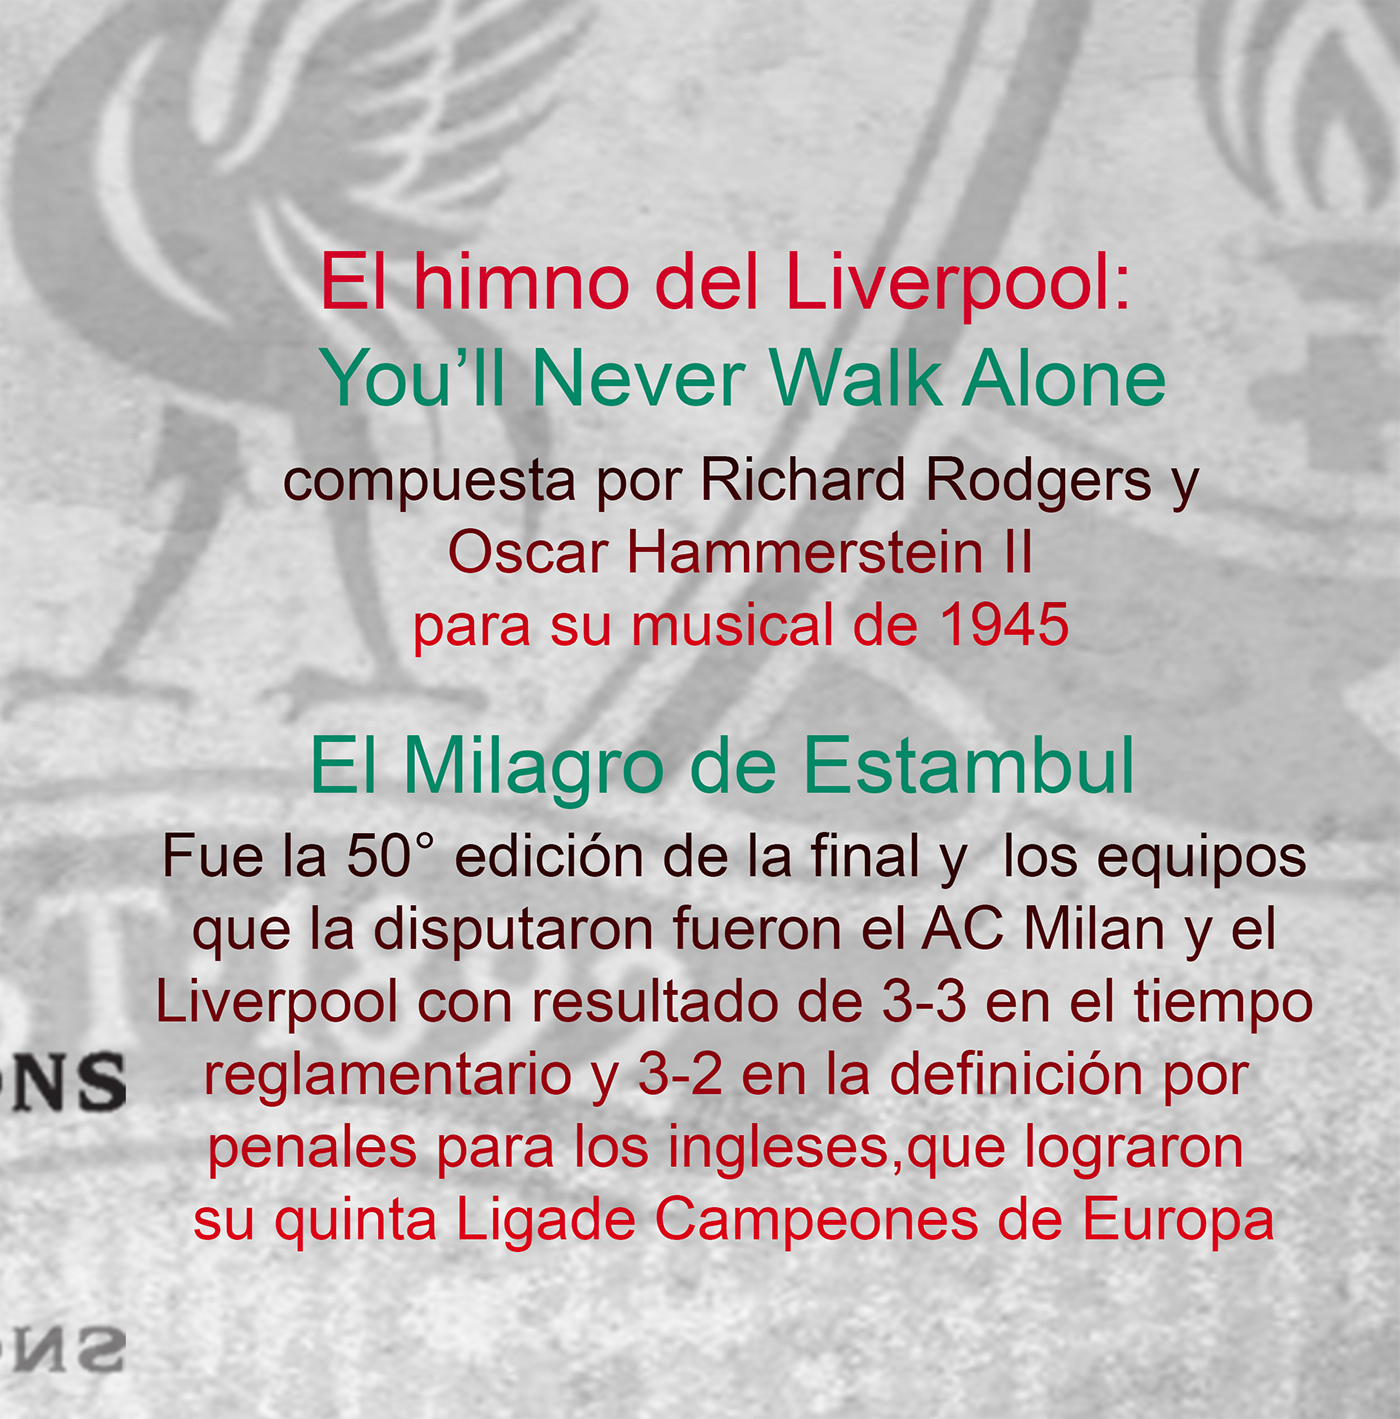 deporte infografia Futbol Linea Grafica diseño gráfico impresion Liverpool europa